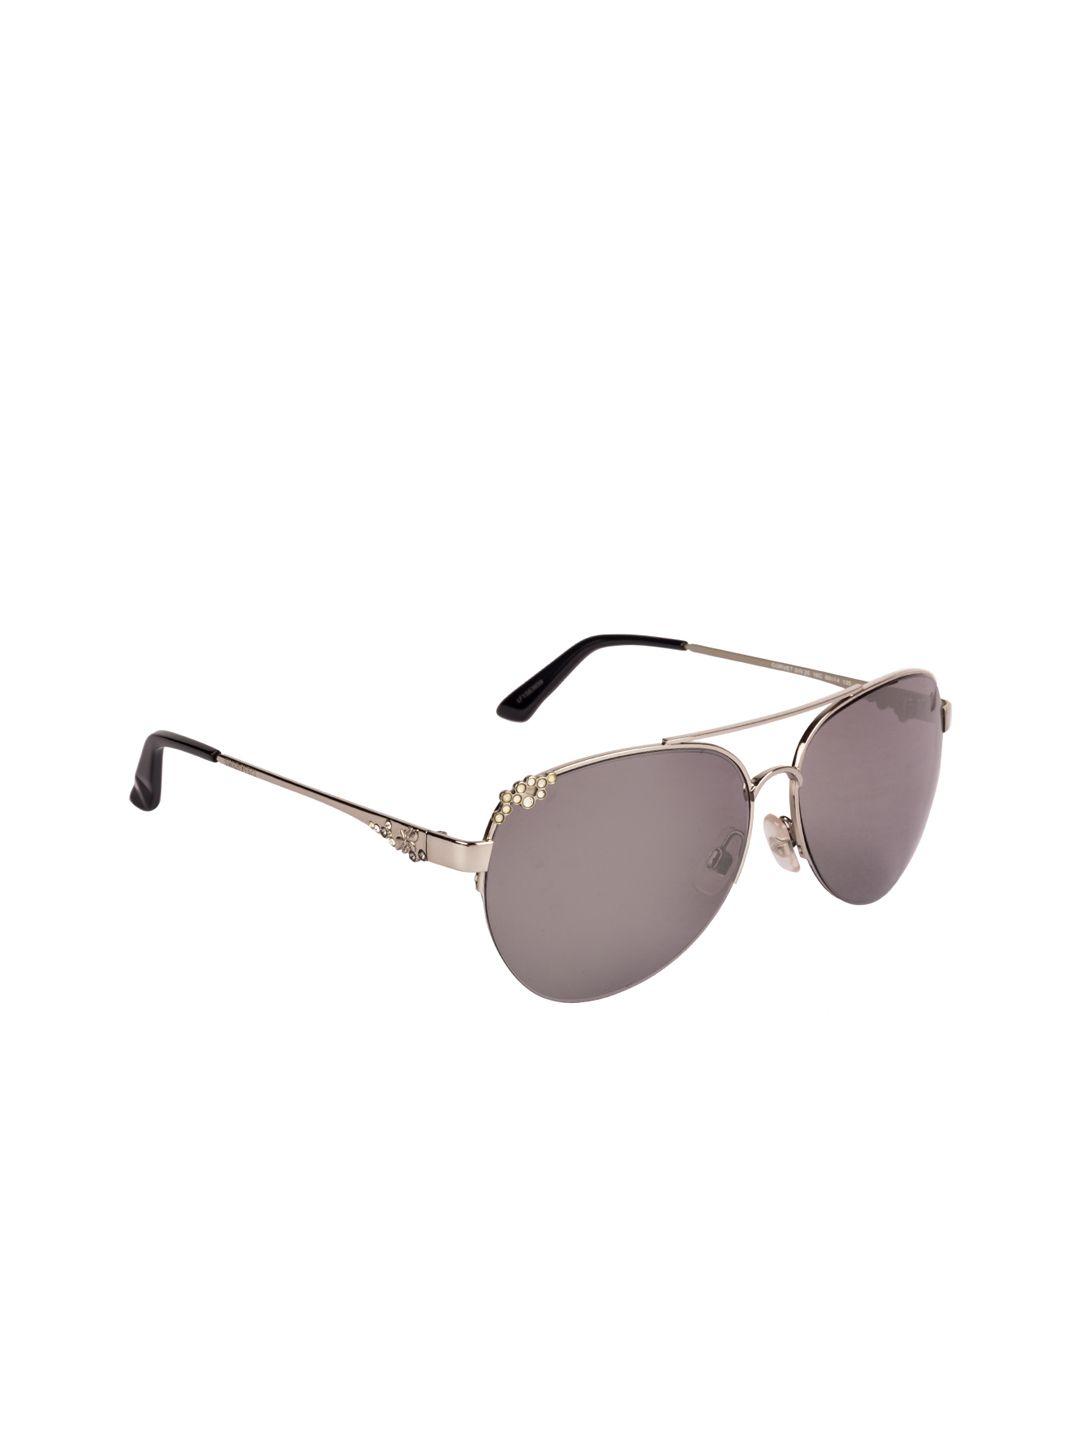 swarovski women silver frame with silver lens stylish oval shape sunglasses sk0025 60 16c